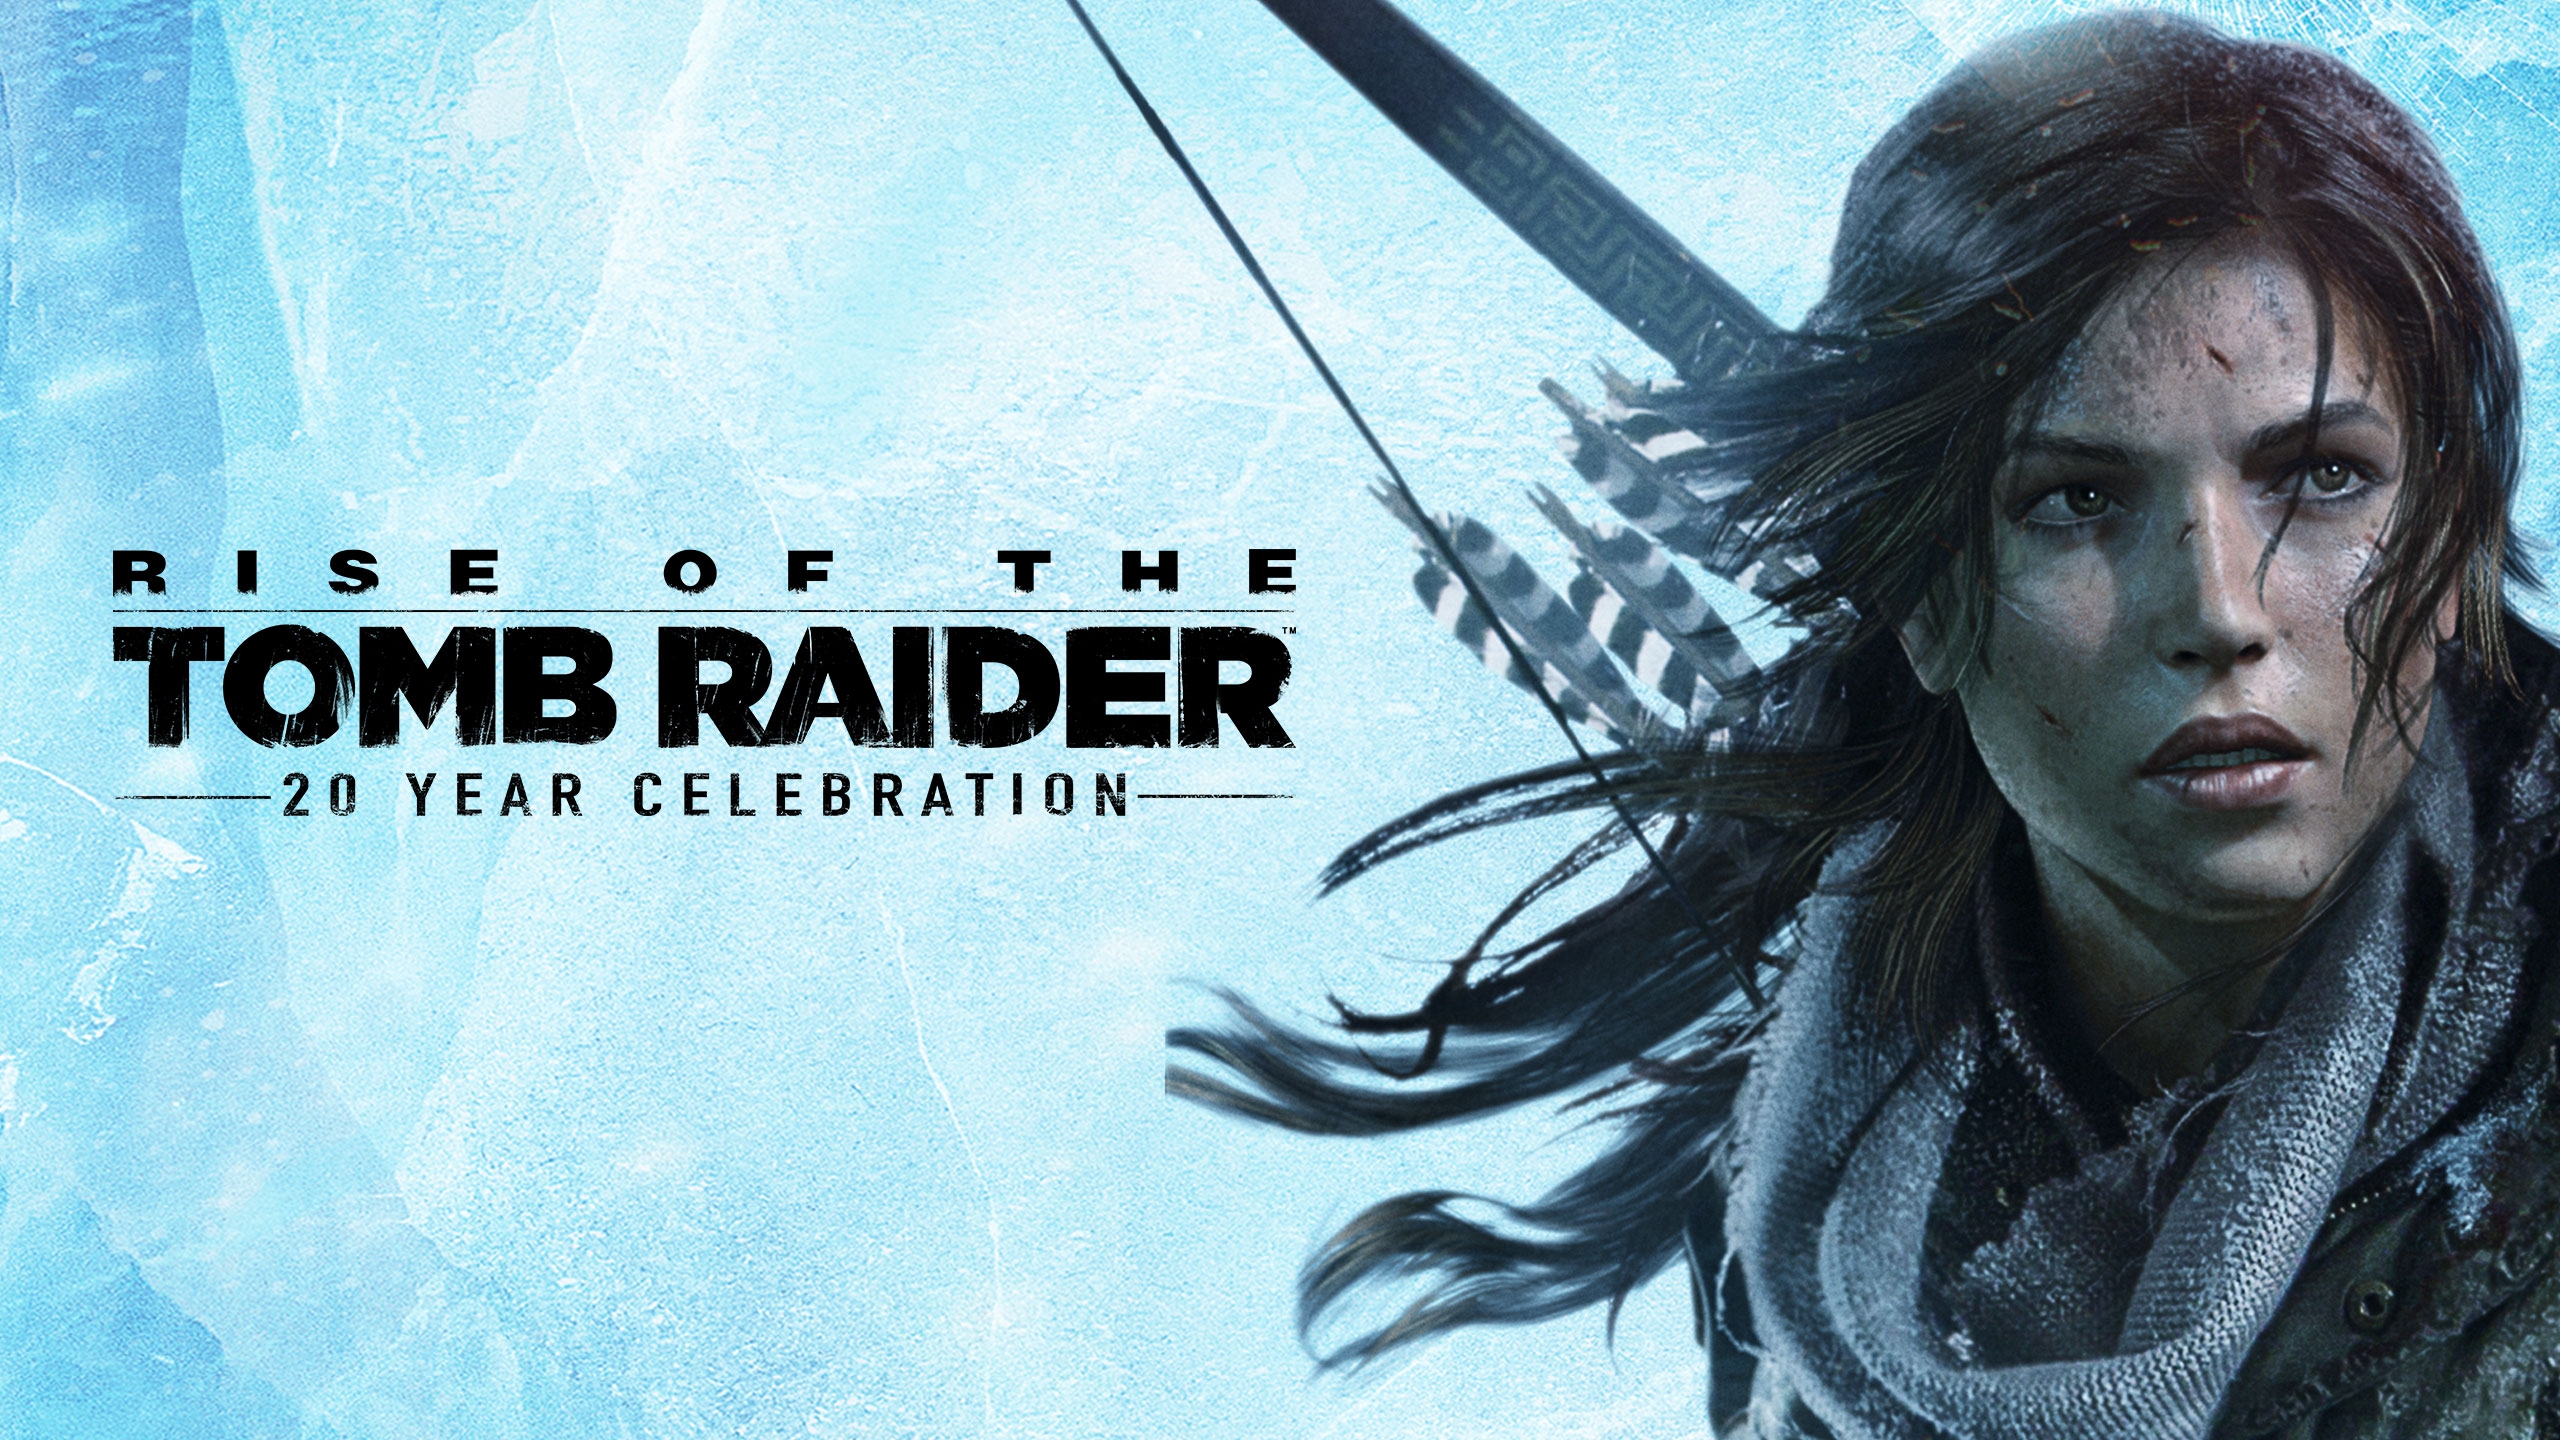 Tomb Raider GOTY Edition, PC Steam Game